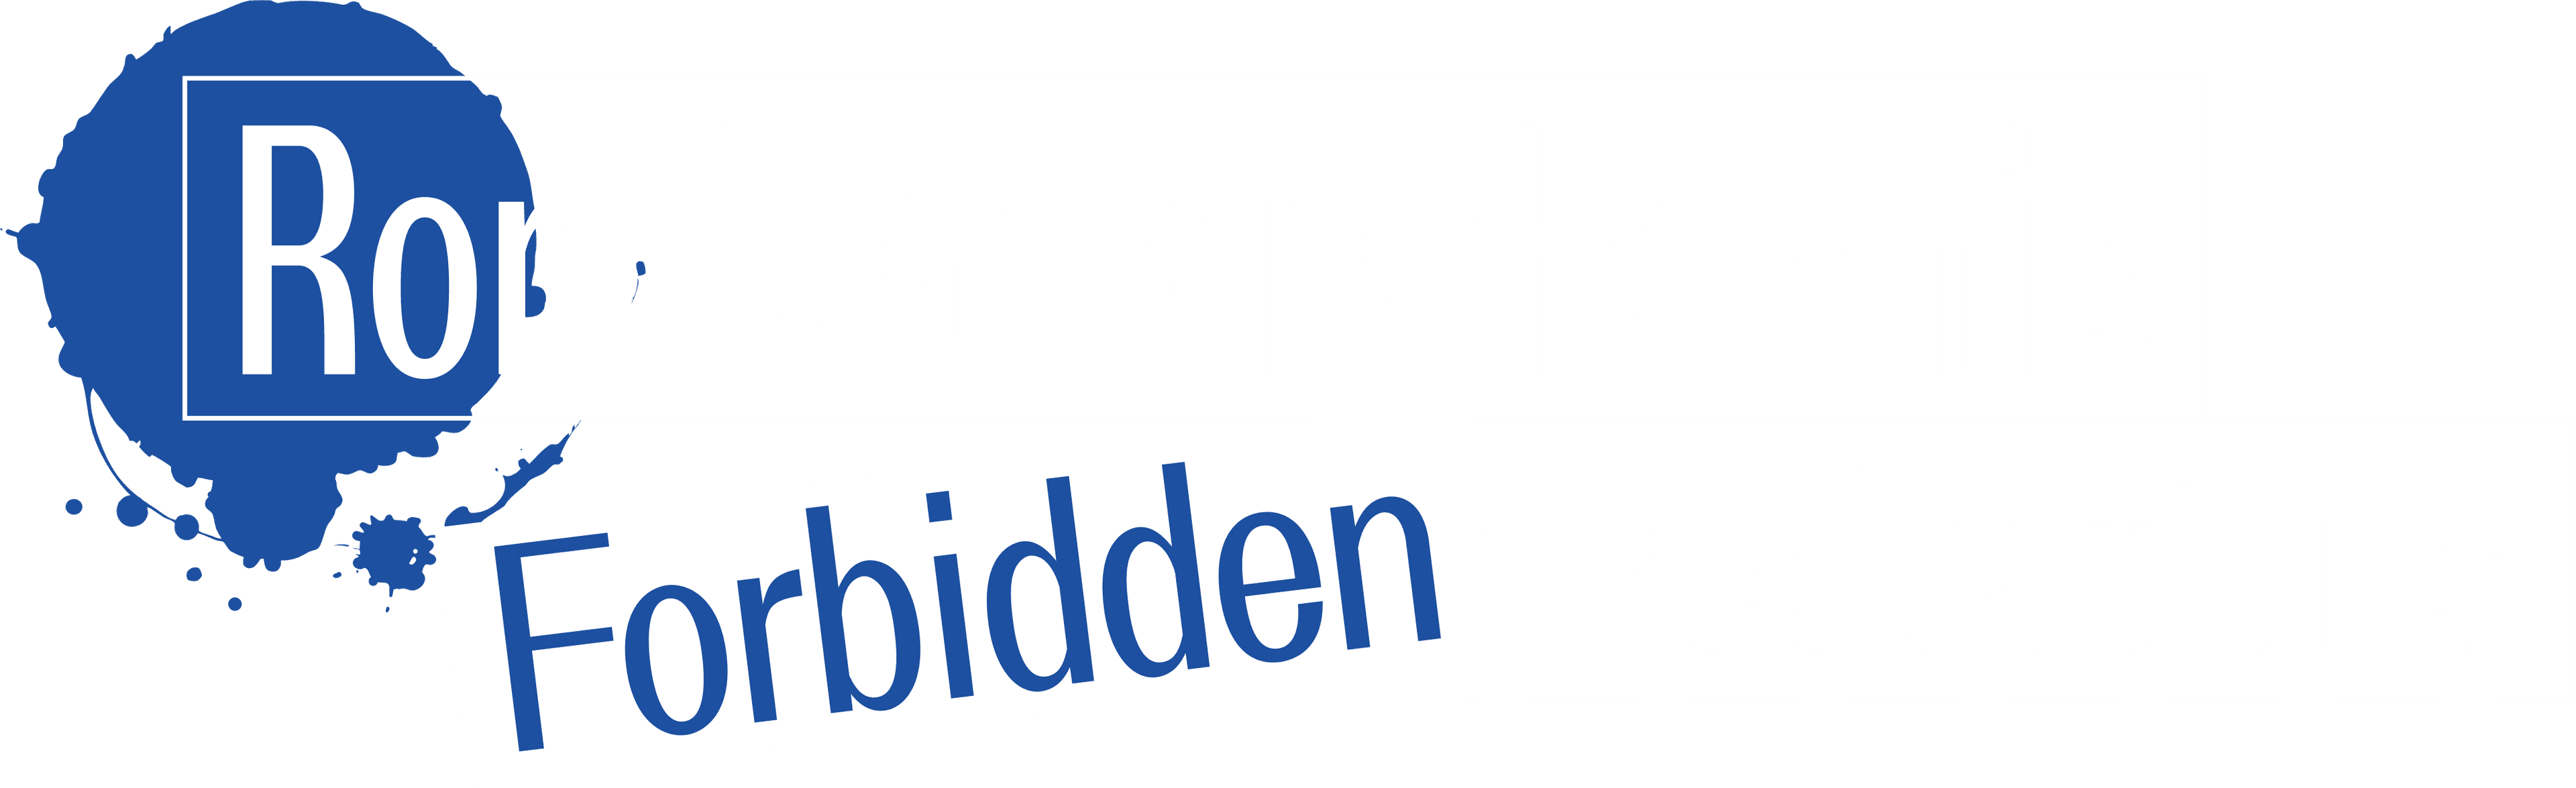 Ron Kamonohashi's Forbidden Deductions logo